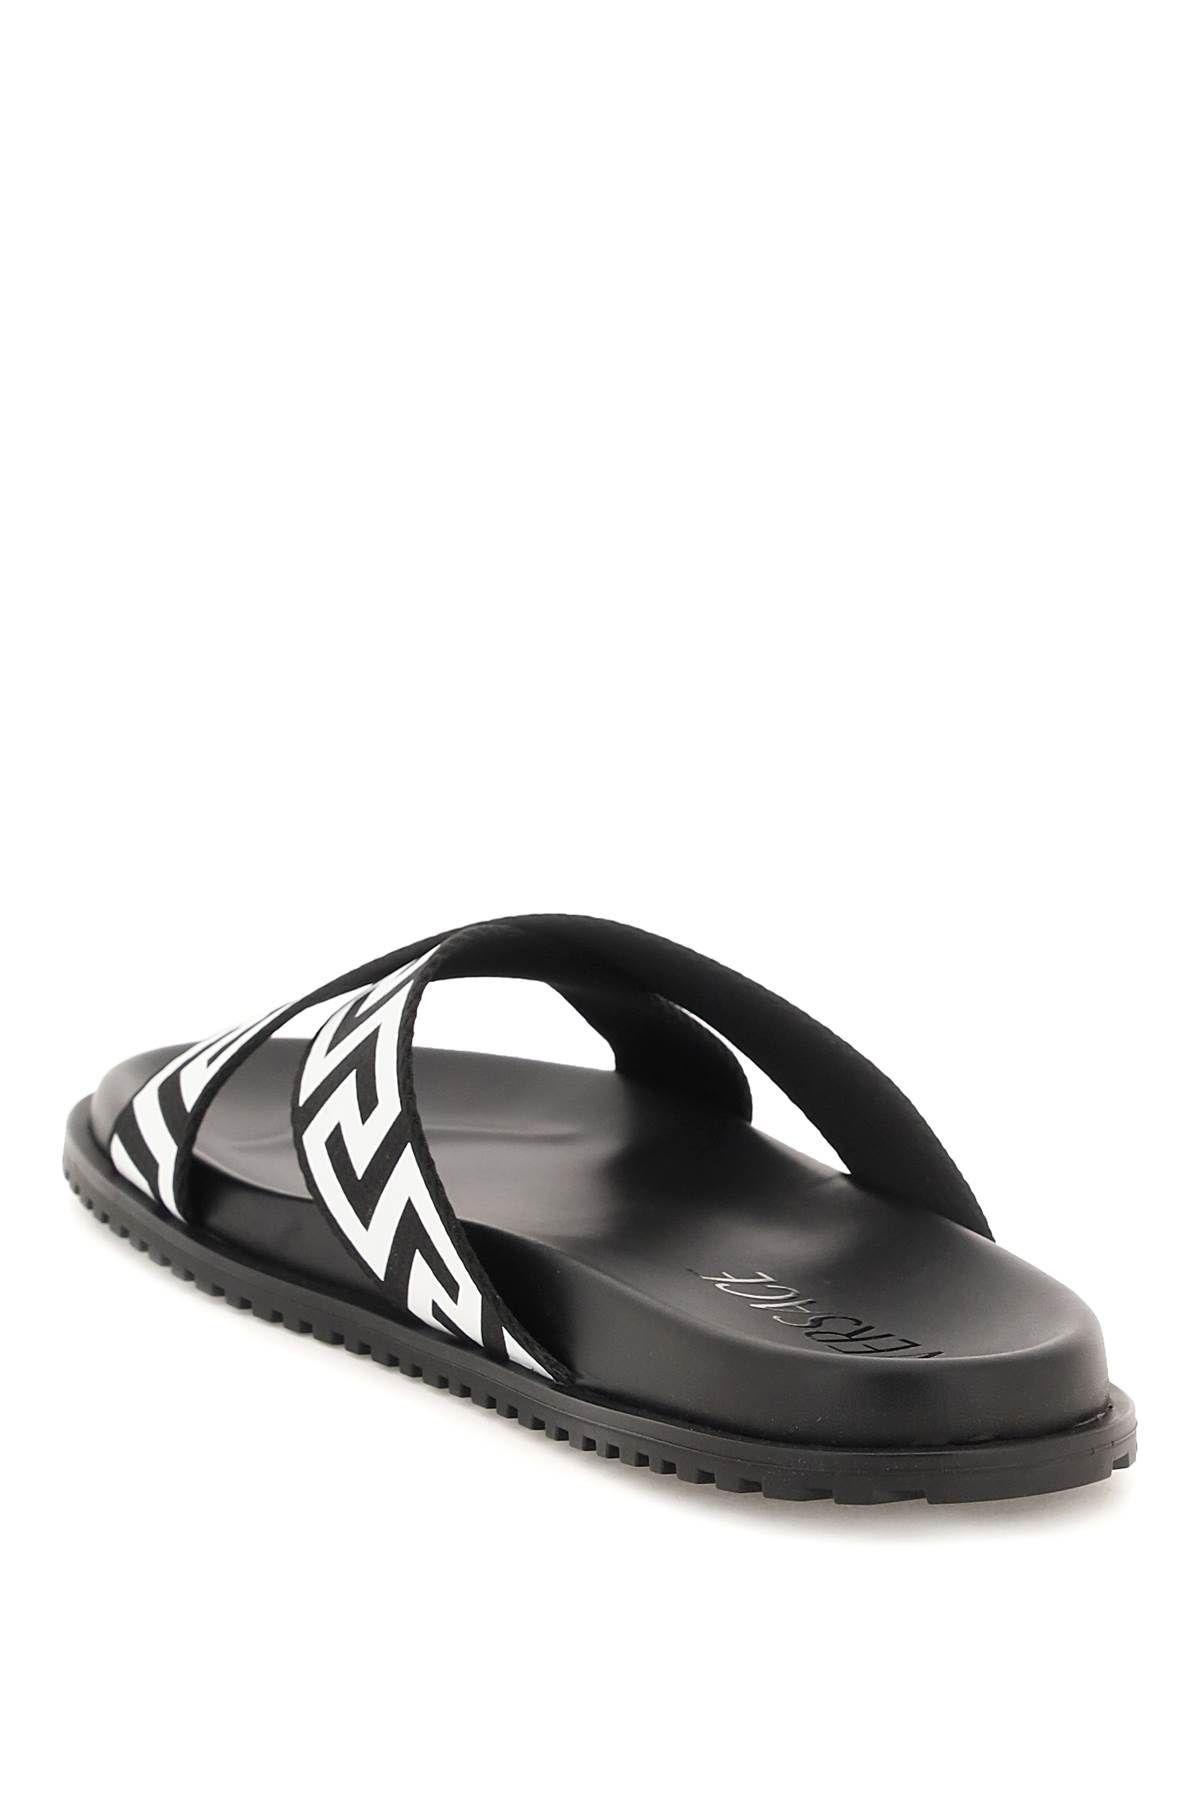 Versace Greca-motif crossover-strap sandals - Black